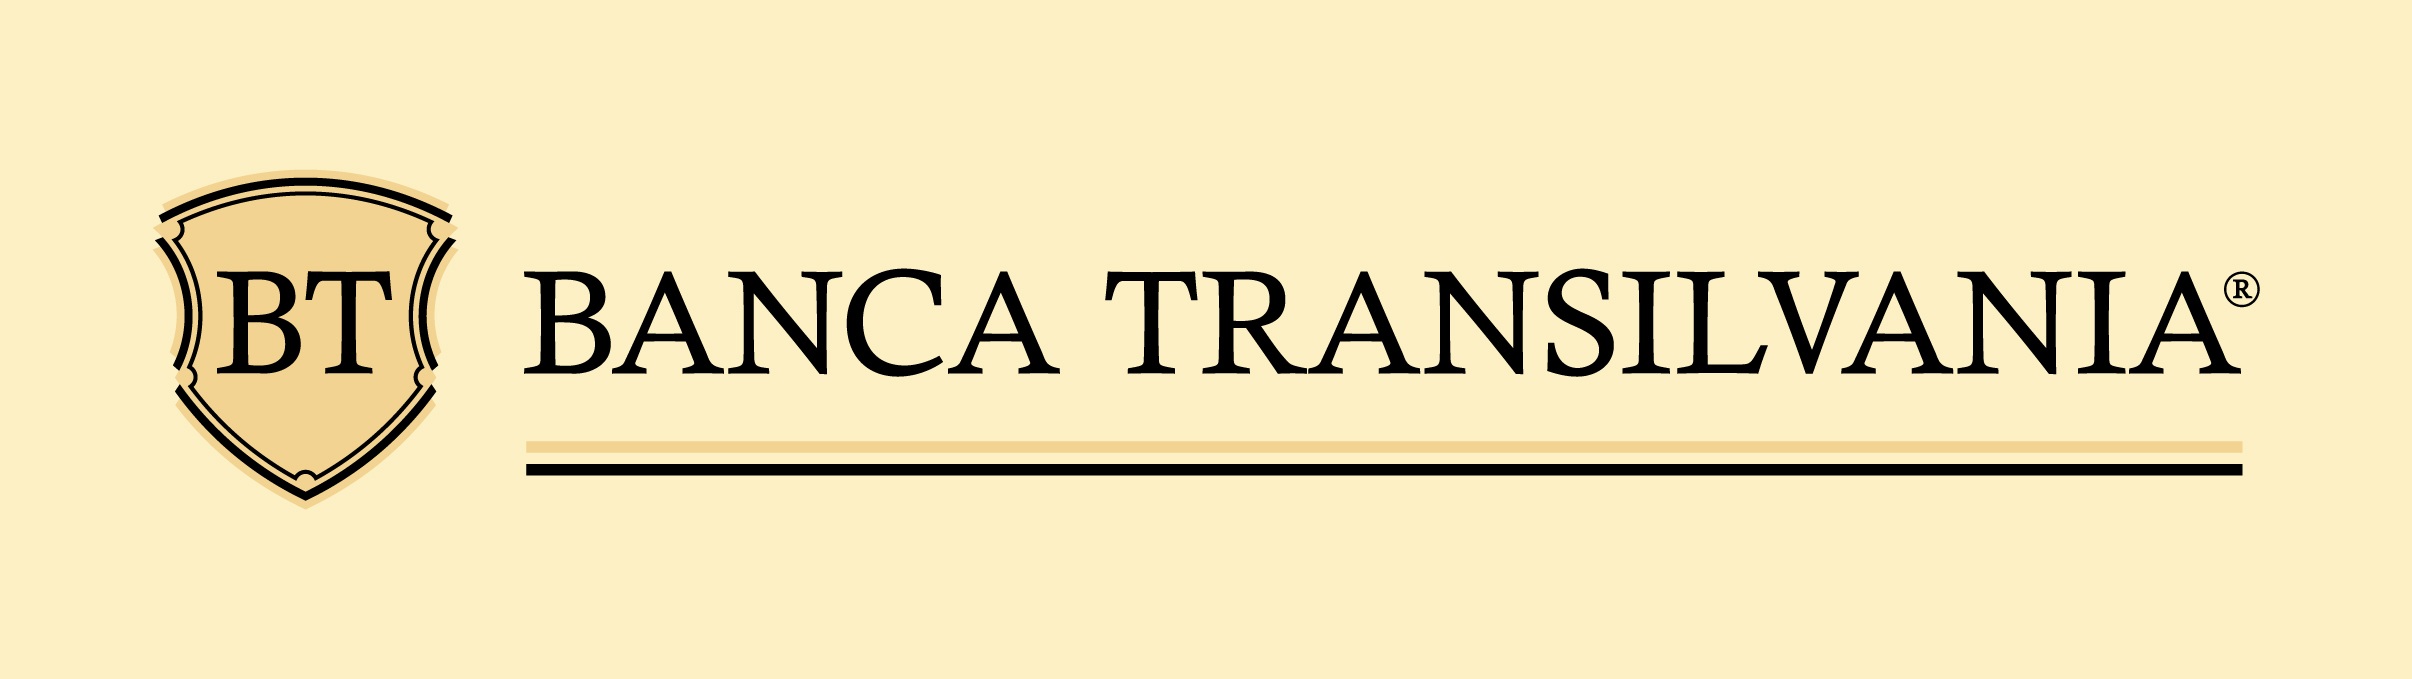 Banca Transilvania Logo photo - 1